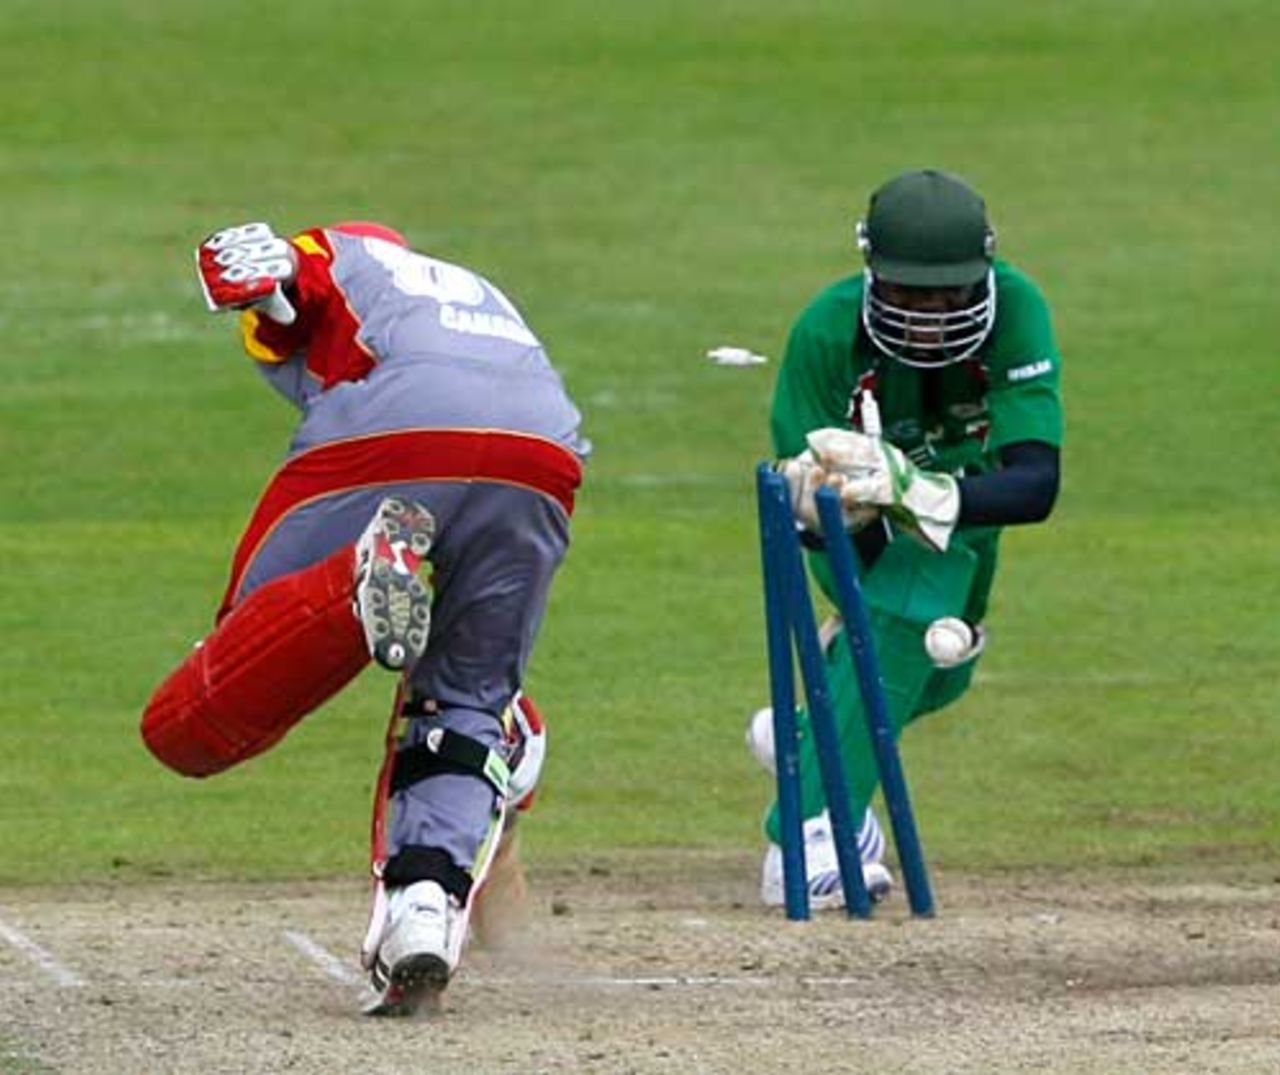 Karun Jethi is run out as Canada struggle, Canada v Kenya, ICC World Twenty20 Qualifiers, Belfast, August 3, 2008